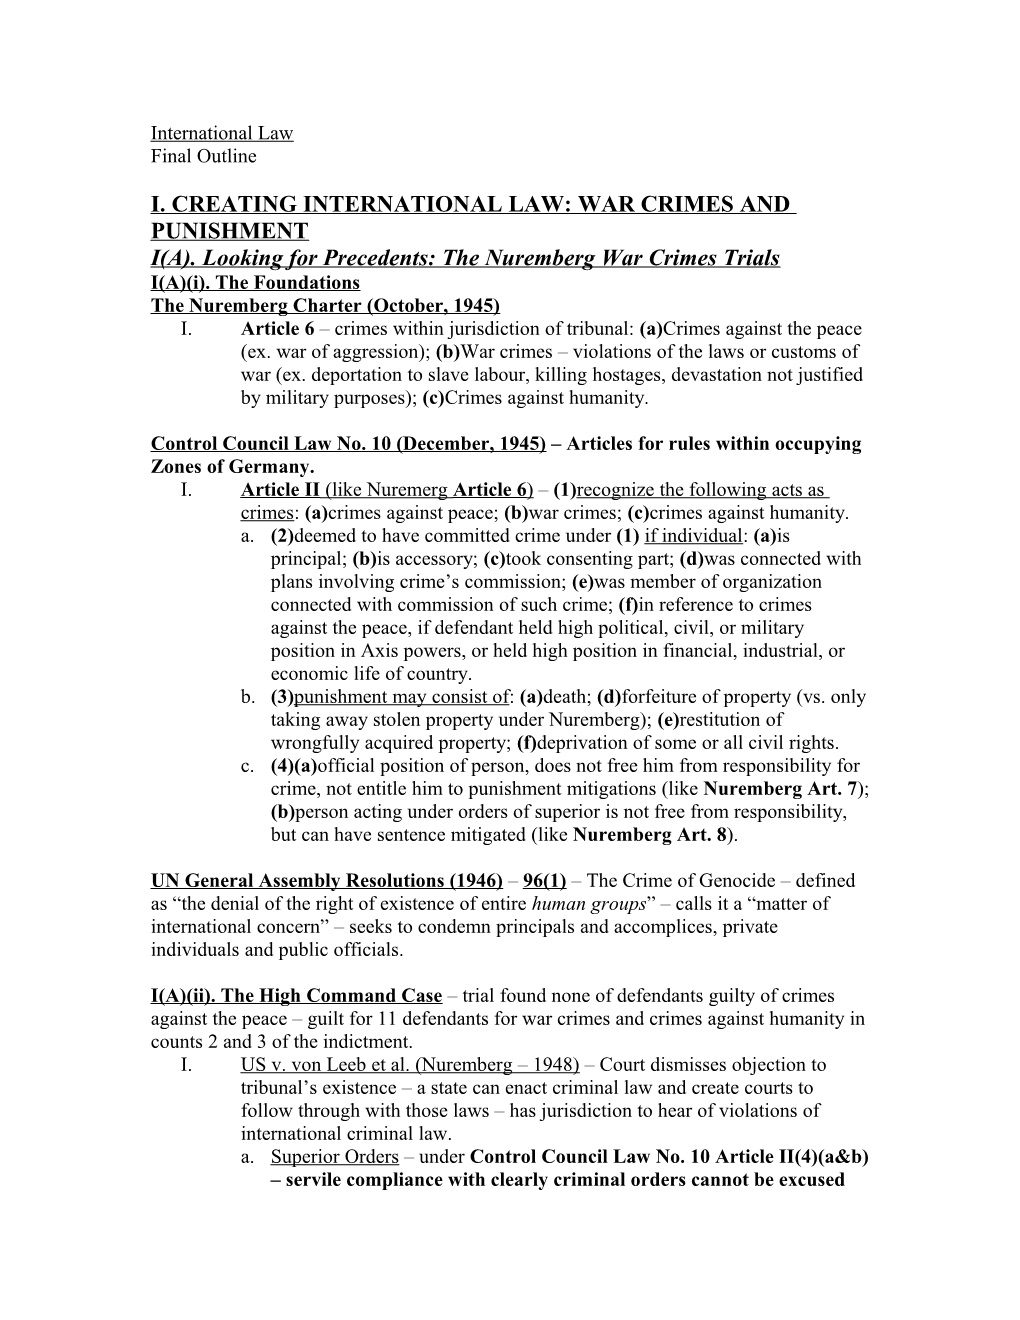 I. Creating International Law: War Crimes and Punishment